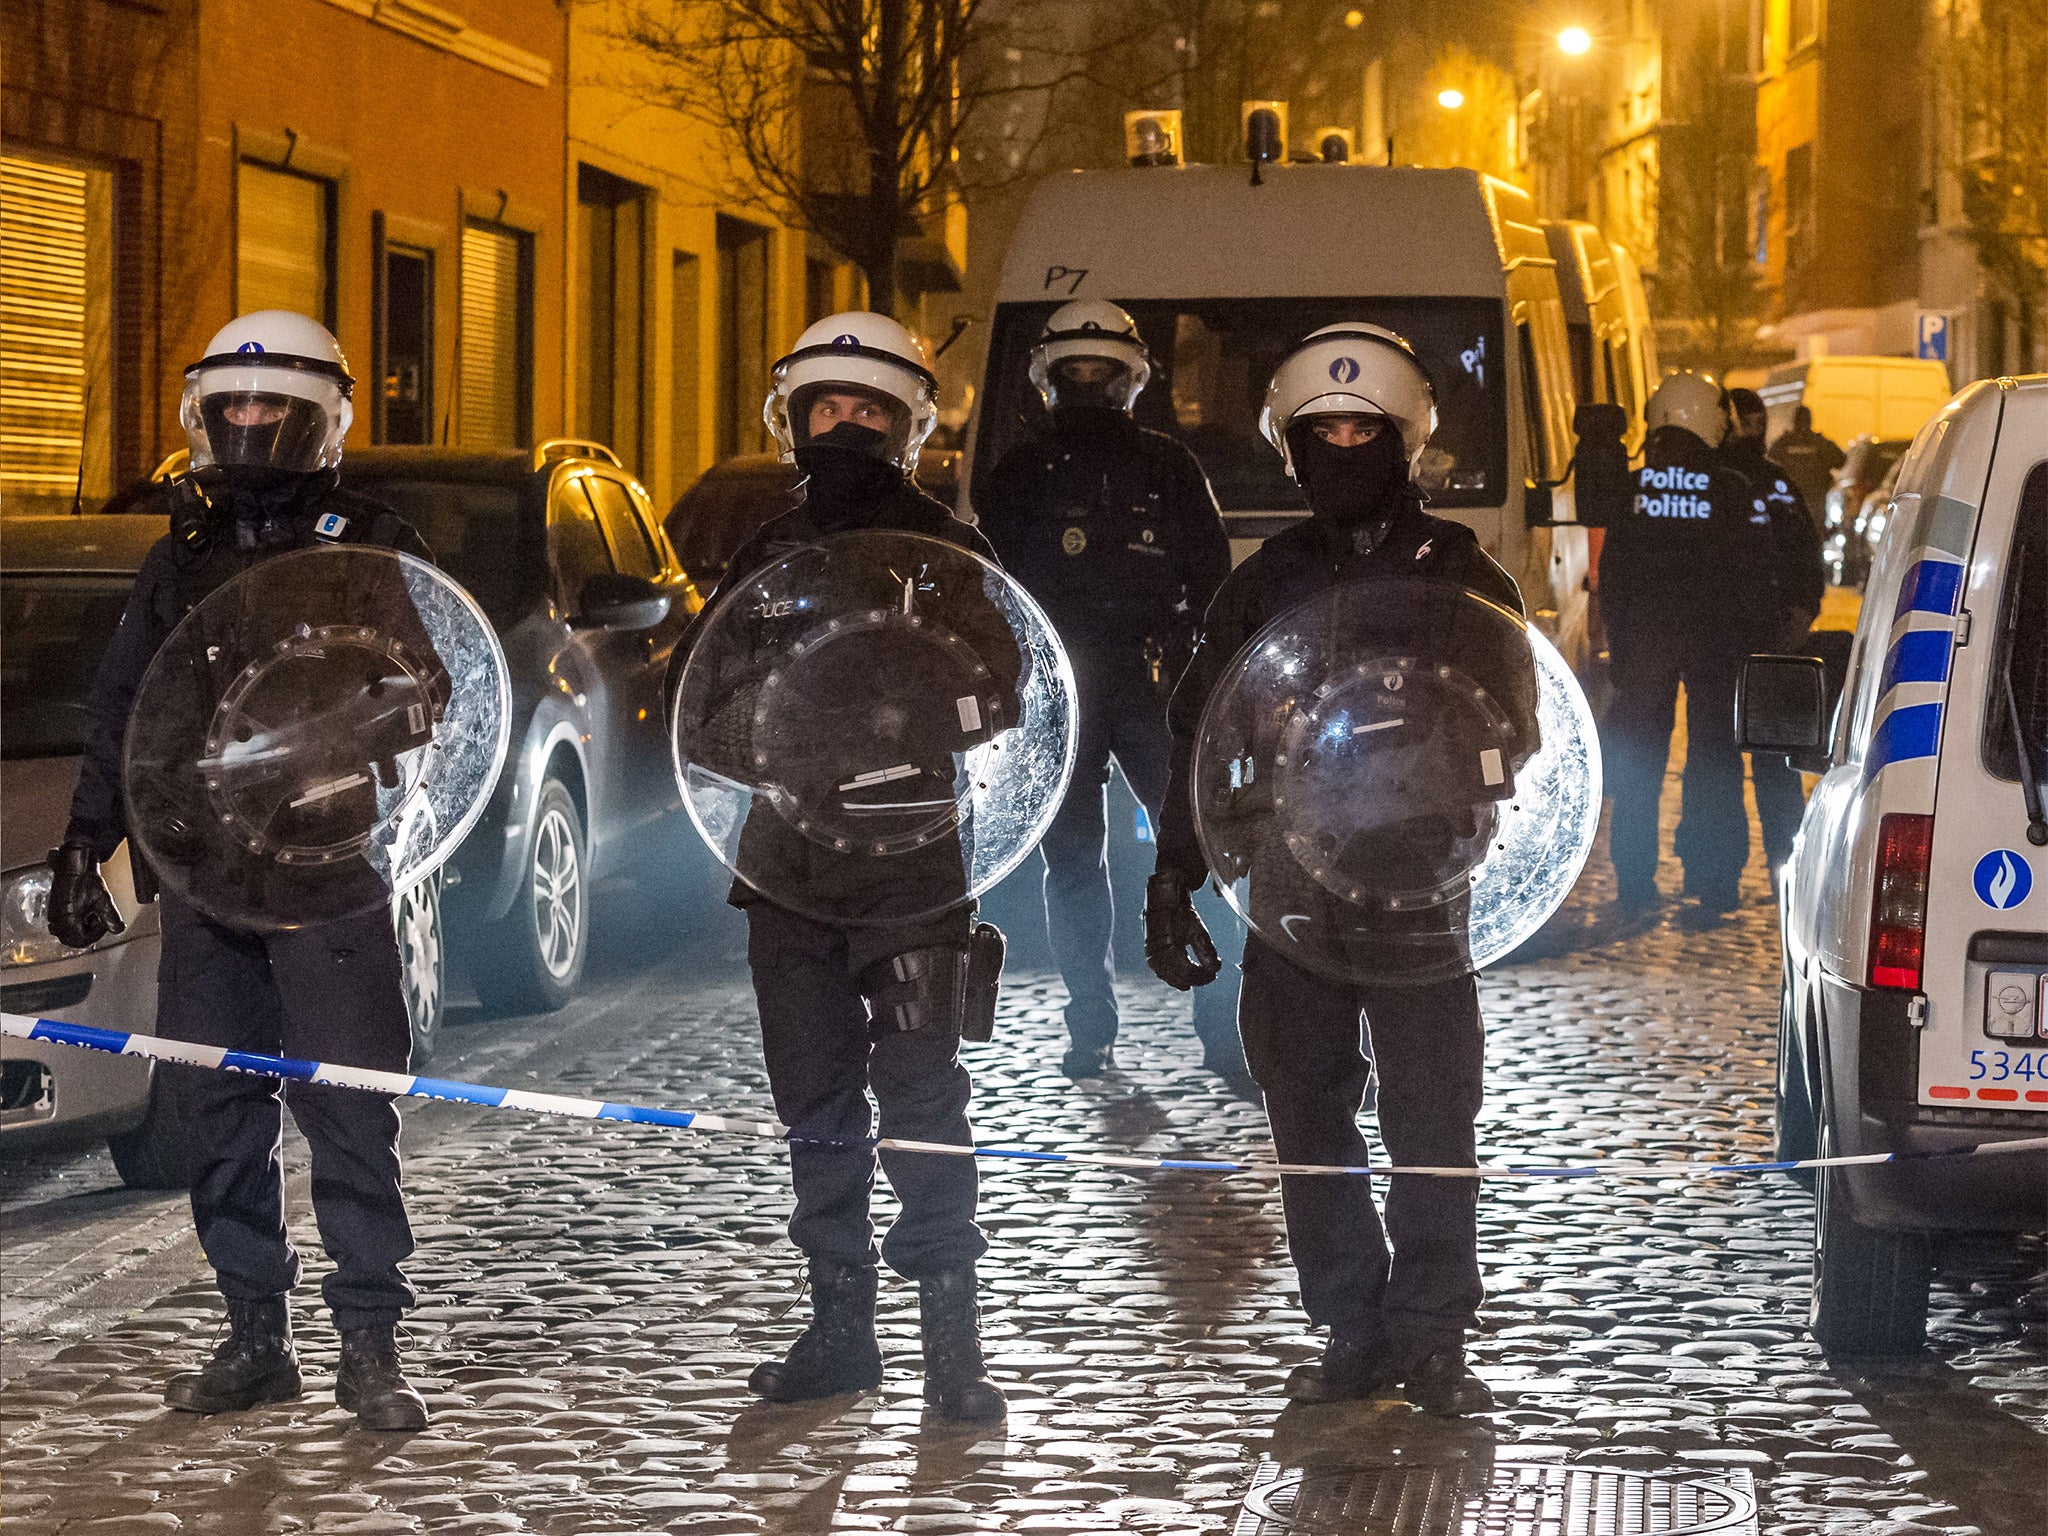 Police officers in Molenbeek last week, following Salah Abdeslam's capture